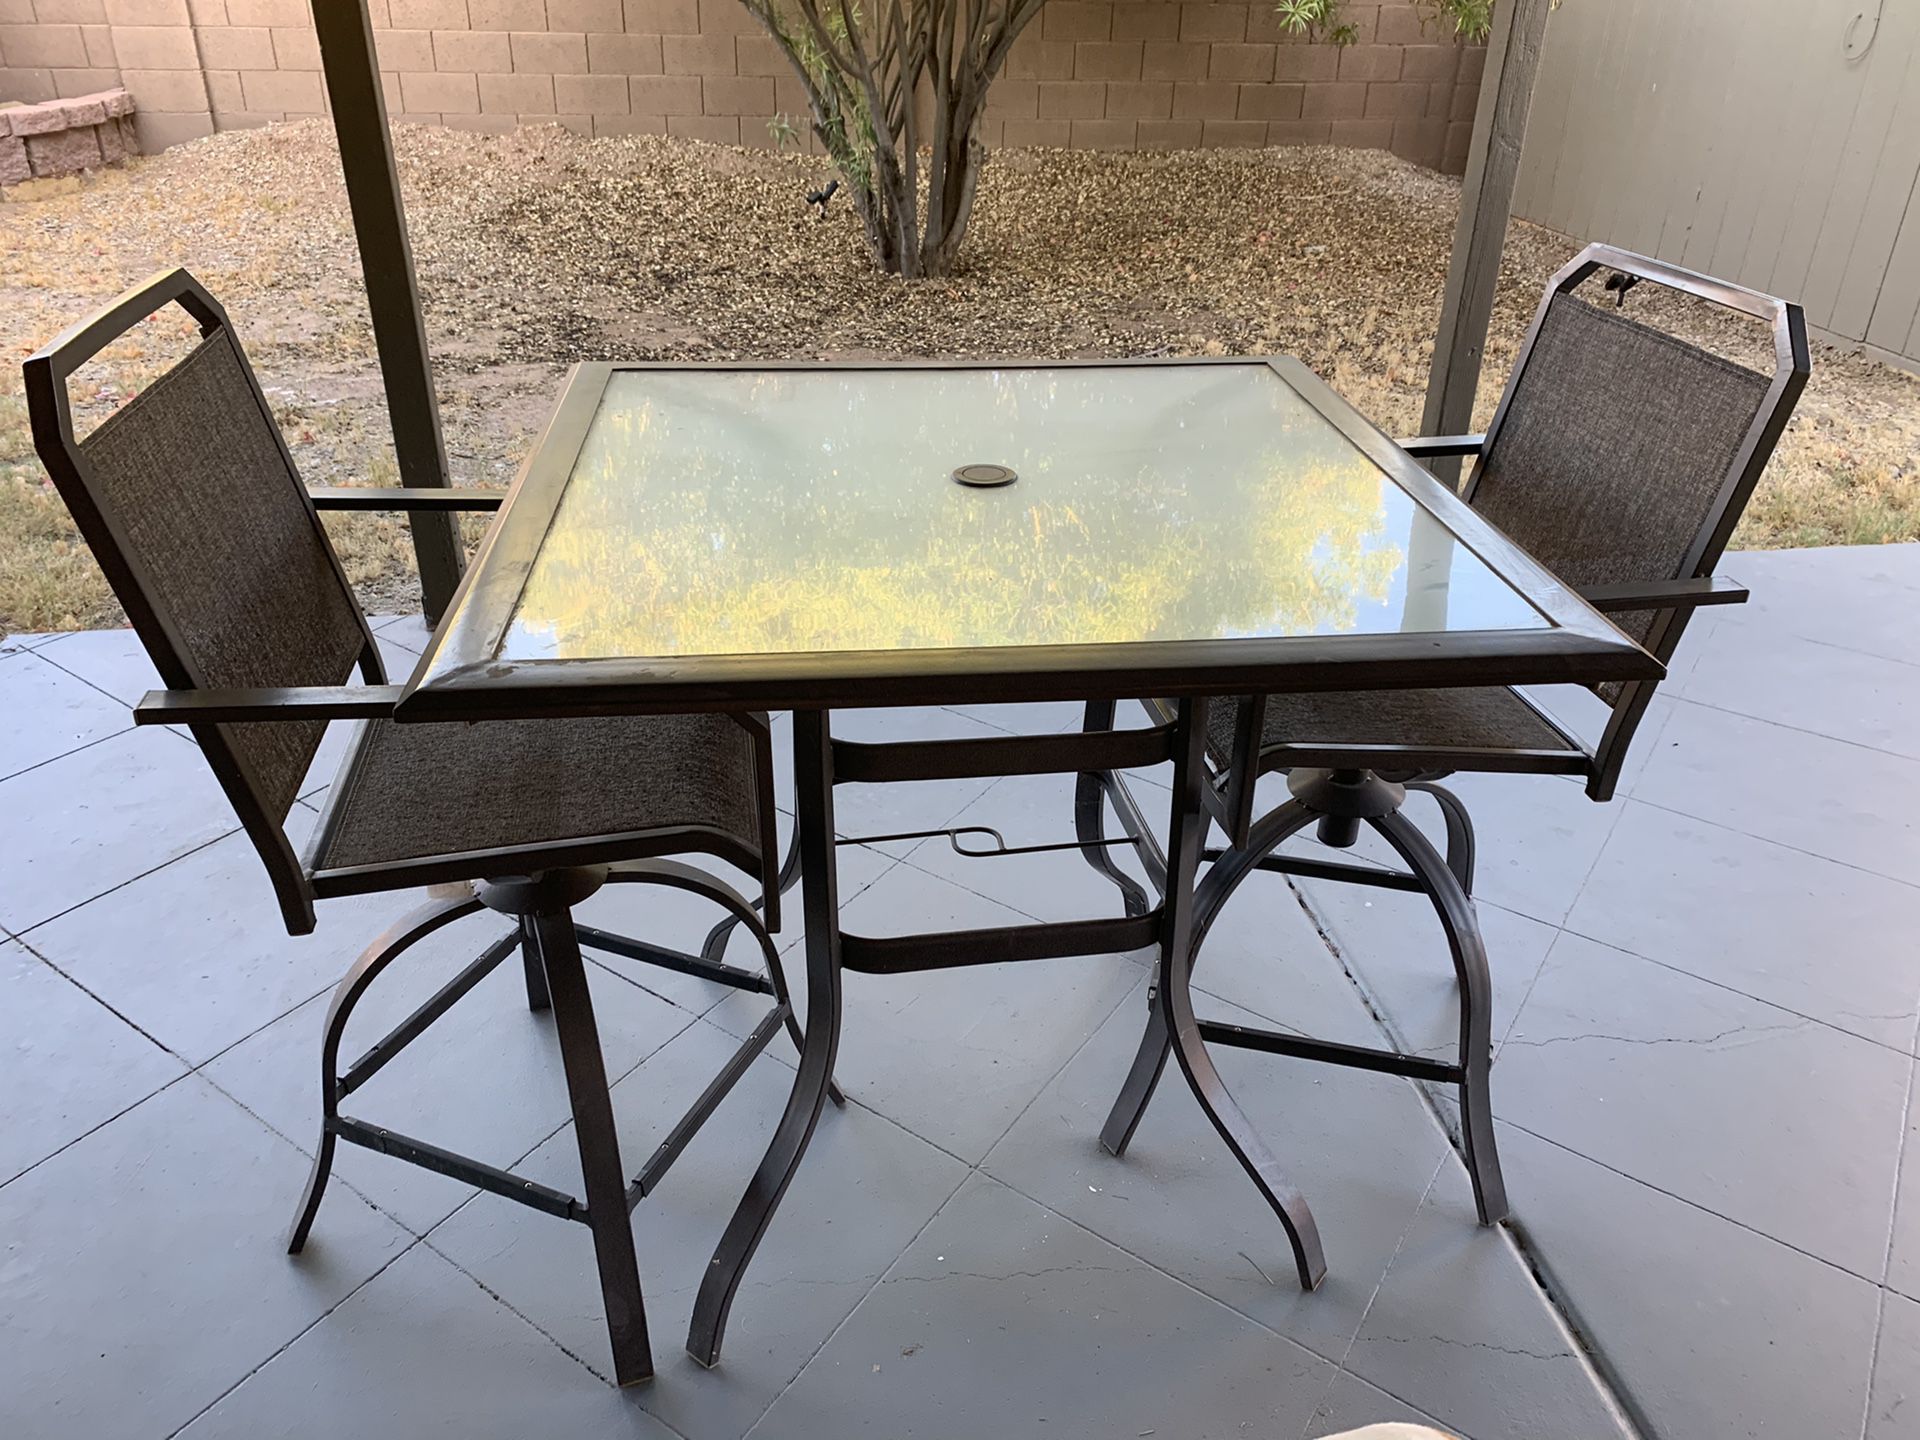 Outdoor patio furniture set